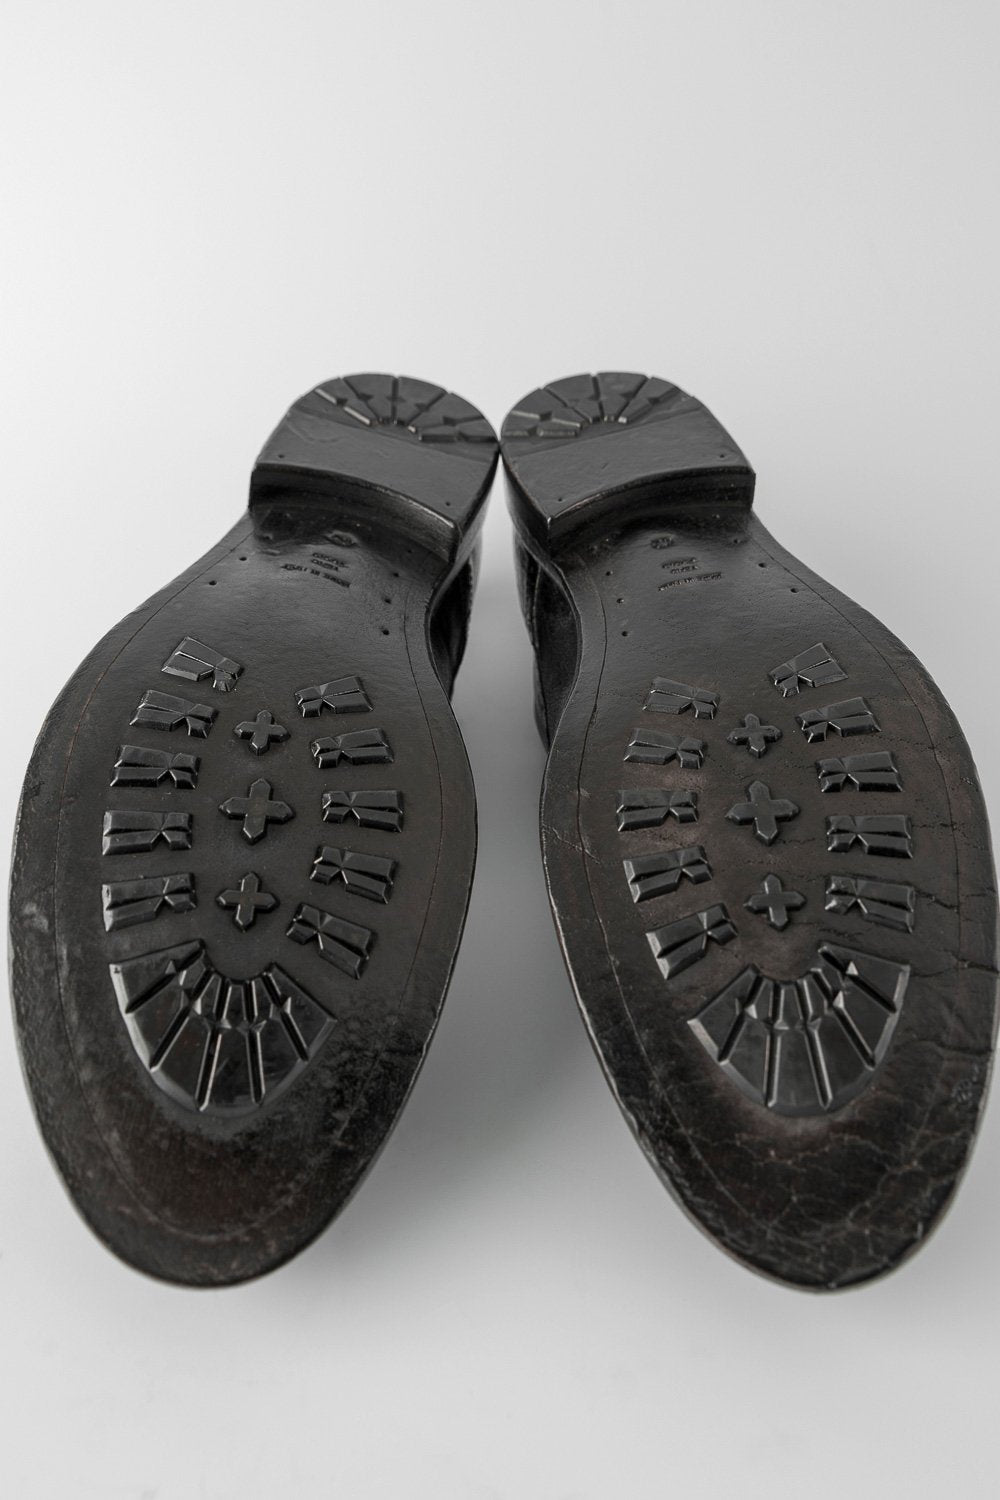 SLOANE black-ash brogue derby shoes.